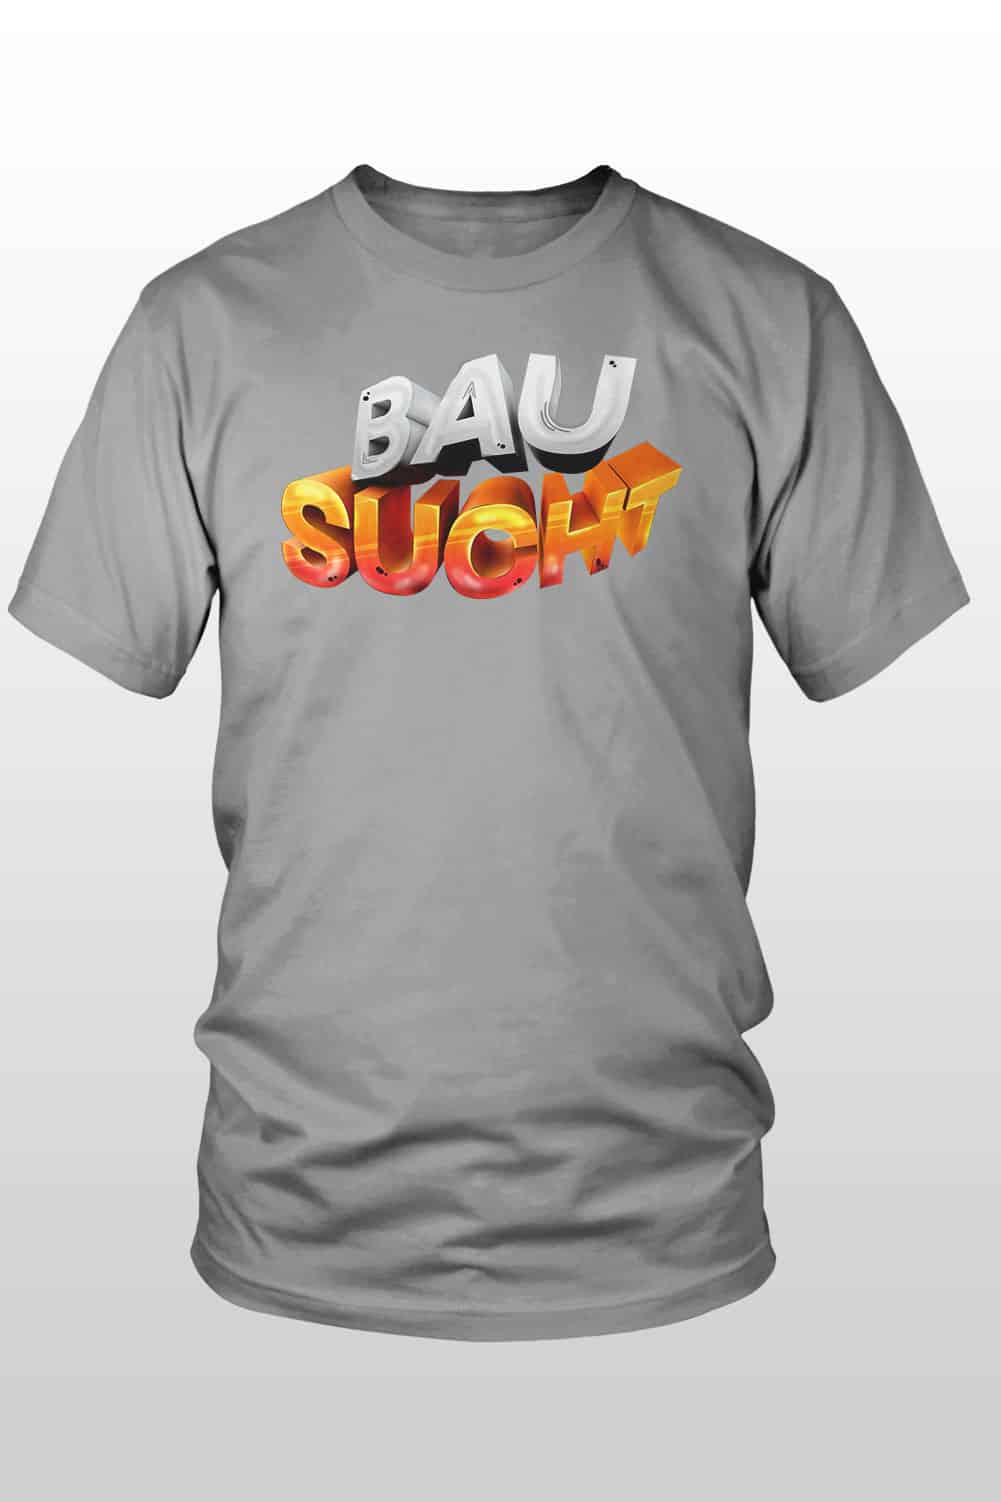 BauSucht Classic Logo T-Shirt